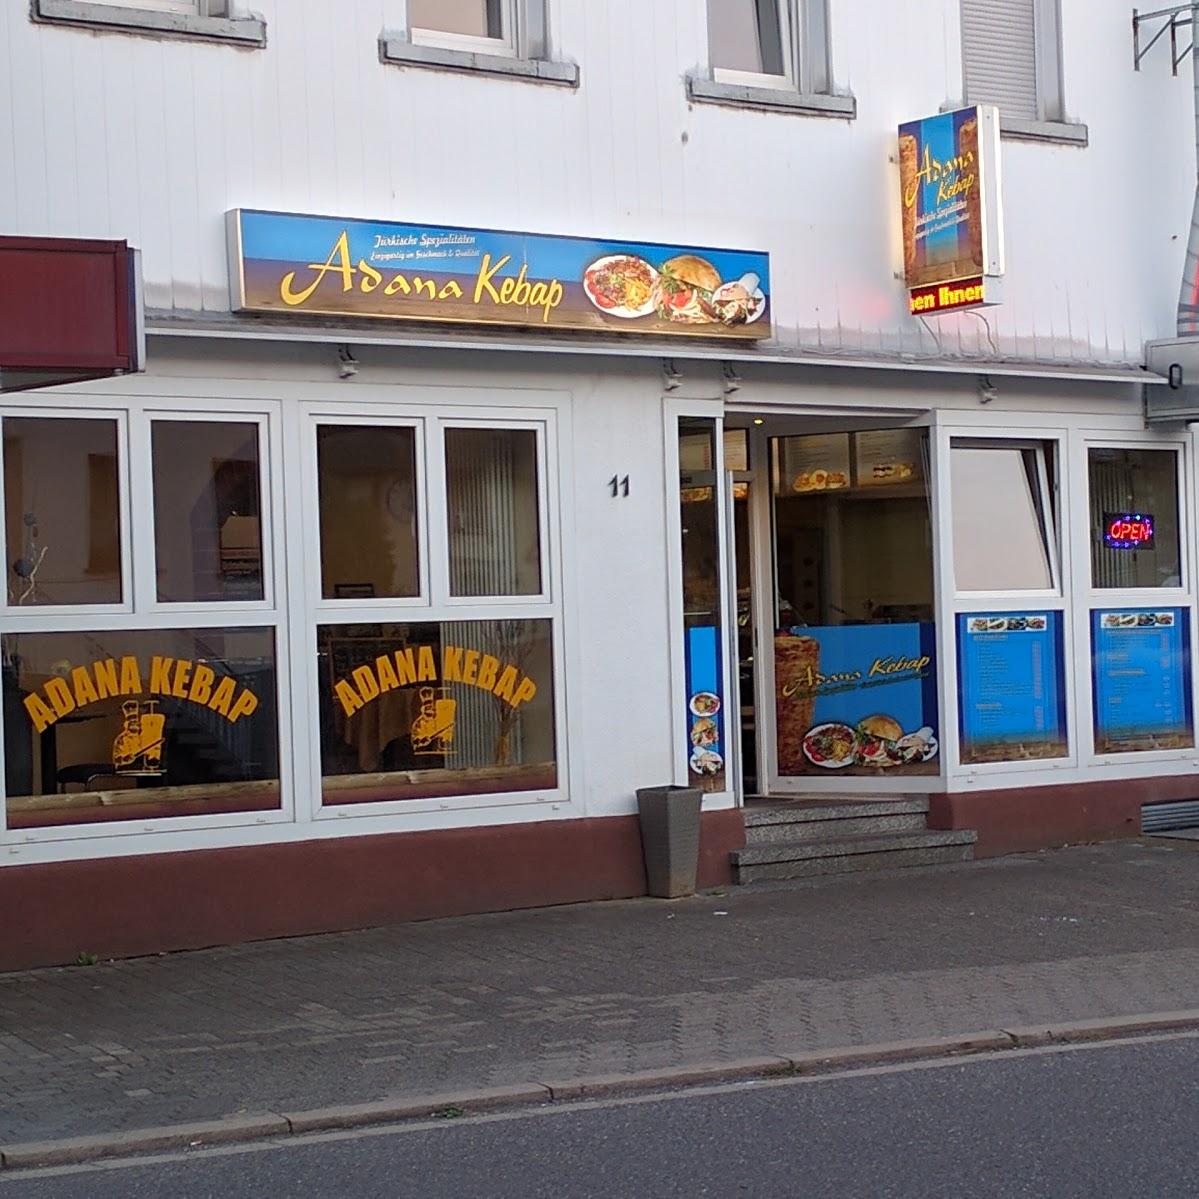 Restaurant "Adanaaa Kebab" in Illingen